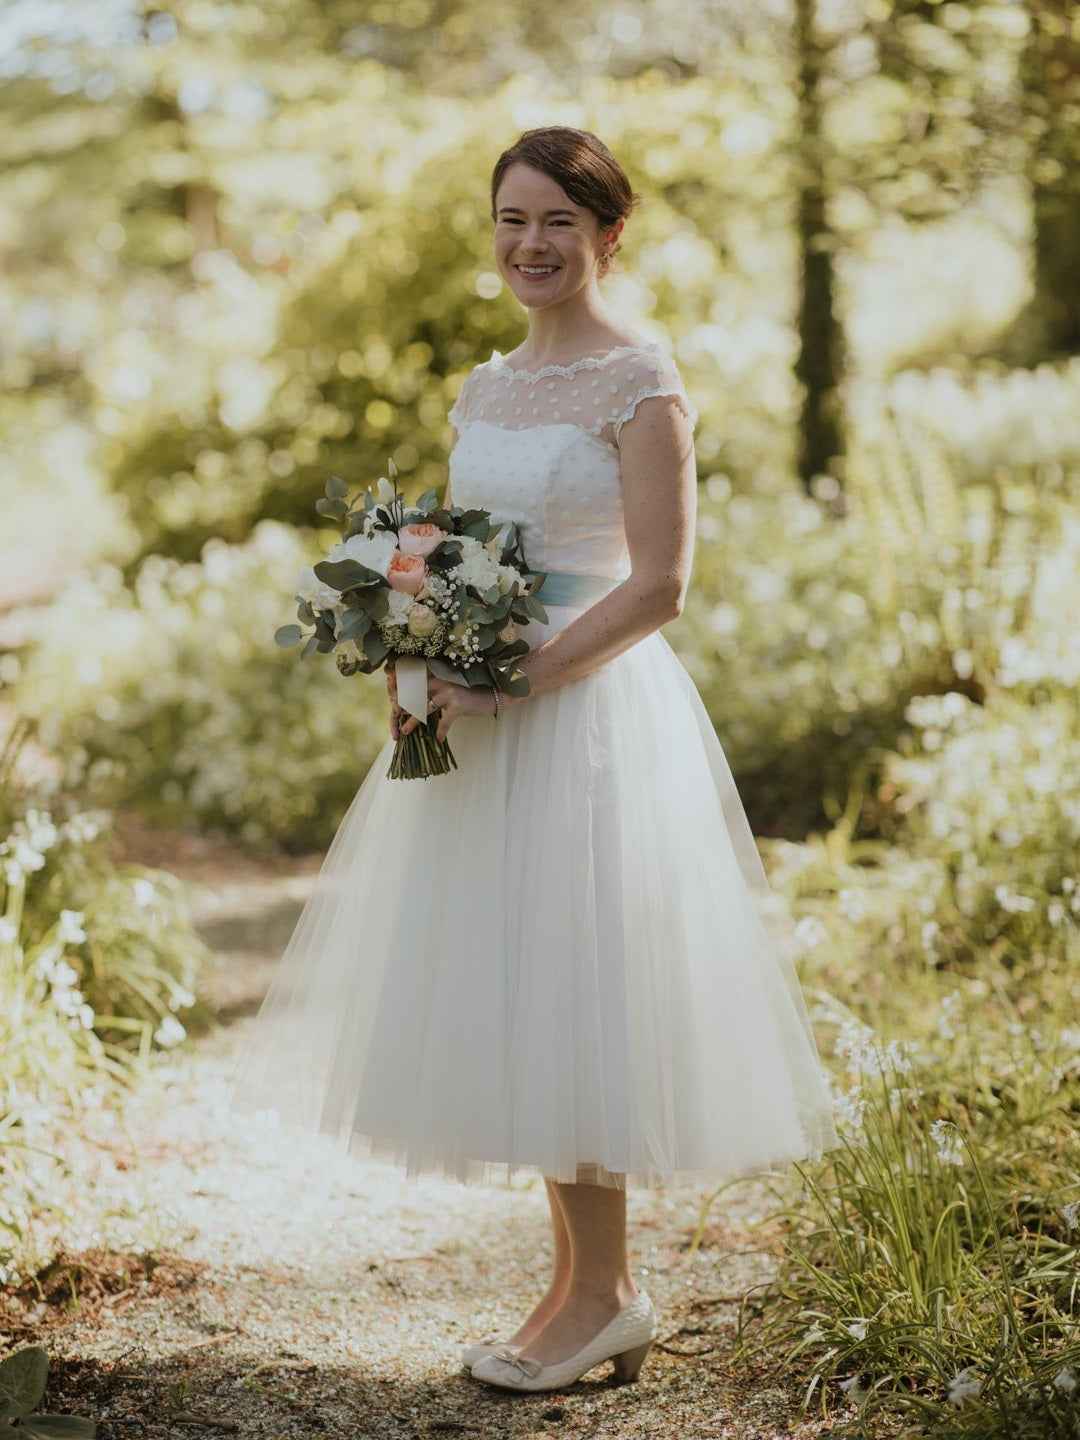 Retro Cap sleeve White Polka Dot Short Wedding Dress Vintage Tea length Wedding Dress with Polka Dots-Dolly Gown